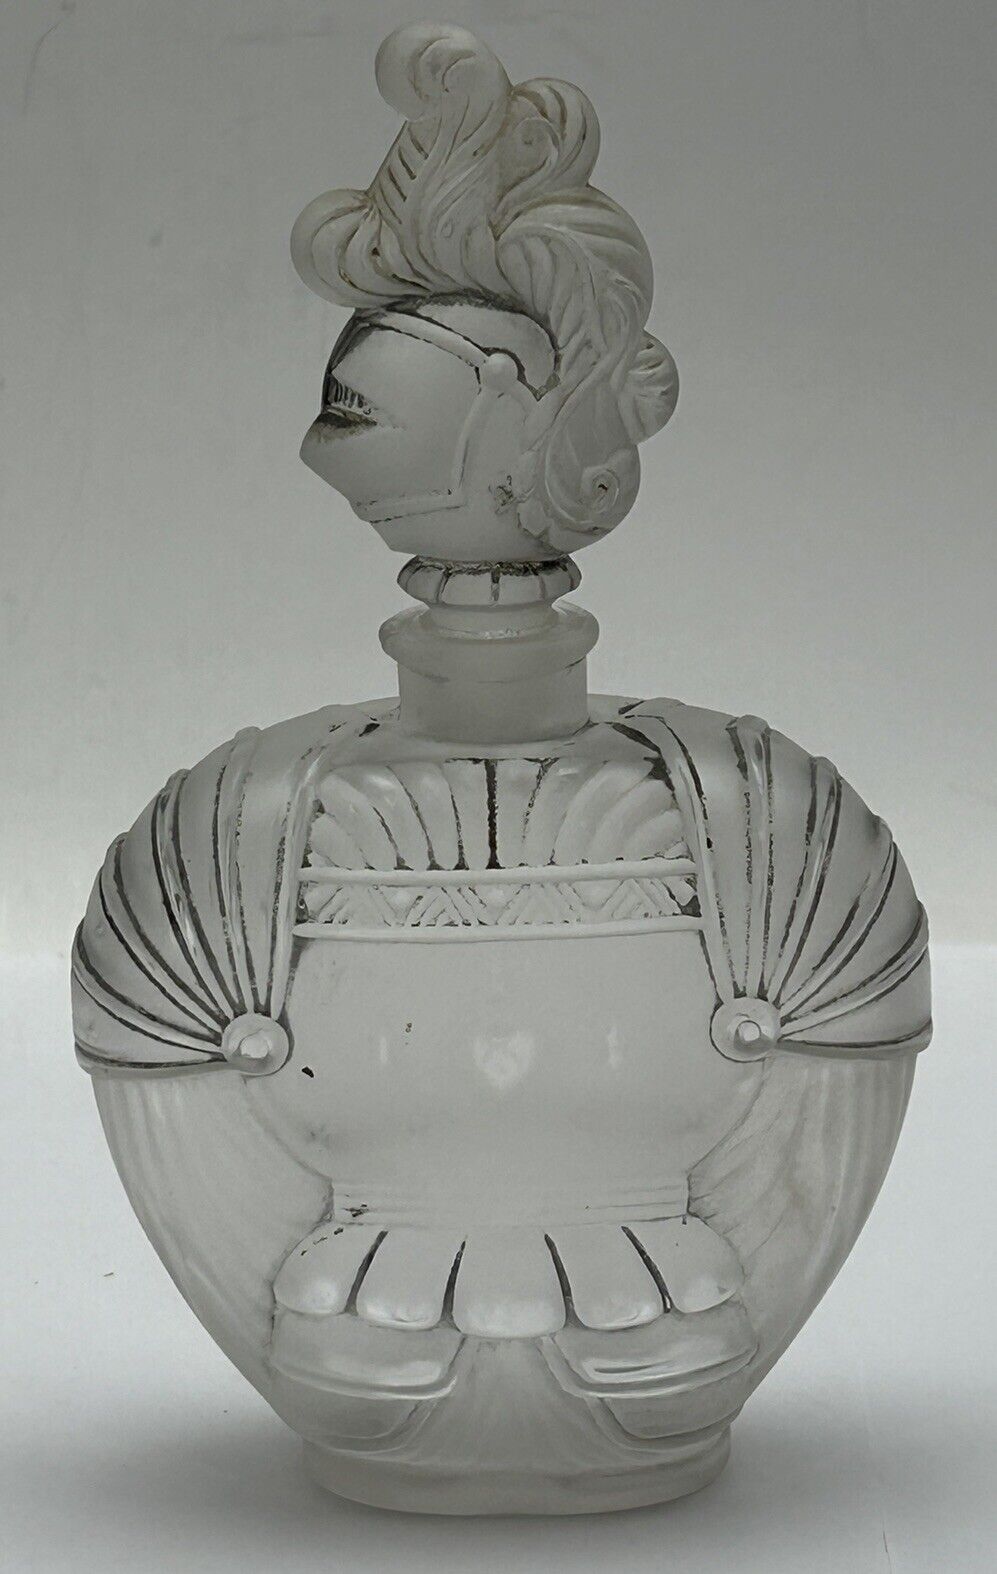 Vintage Ciro “Knight of the Night” Perfume Bottle “Le Chevalier de la Nuit” 1923